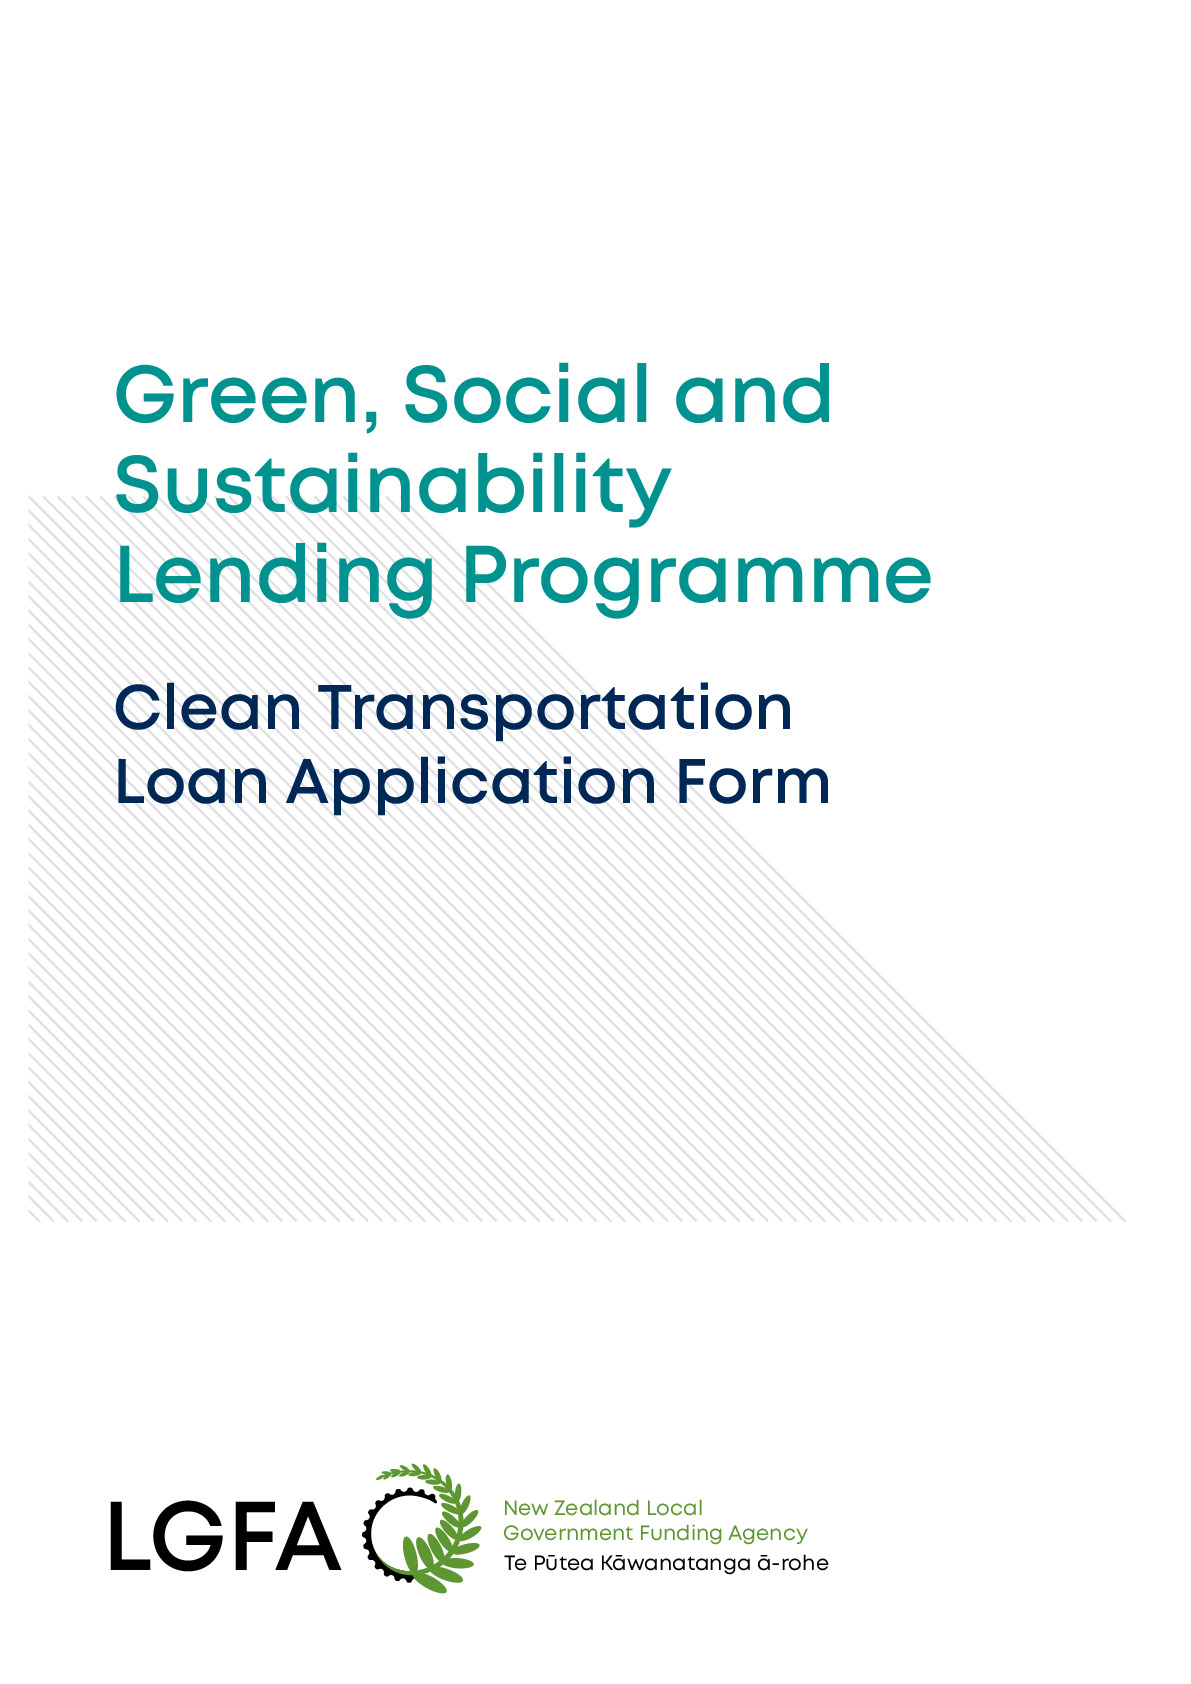 Clean Transportation Loan Application Form 30092021 FINAL